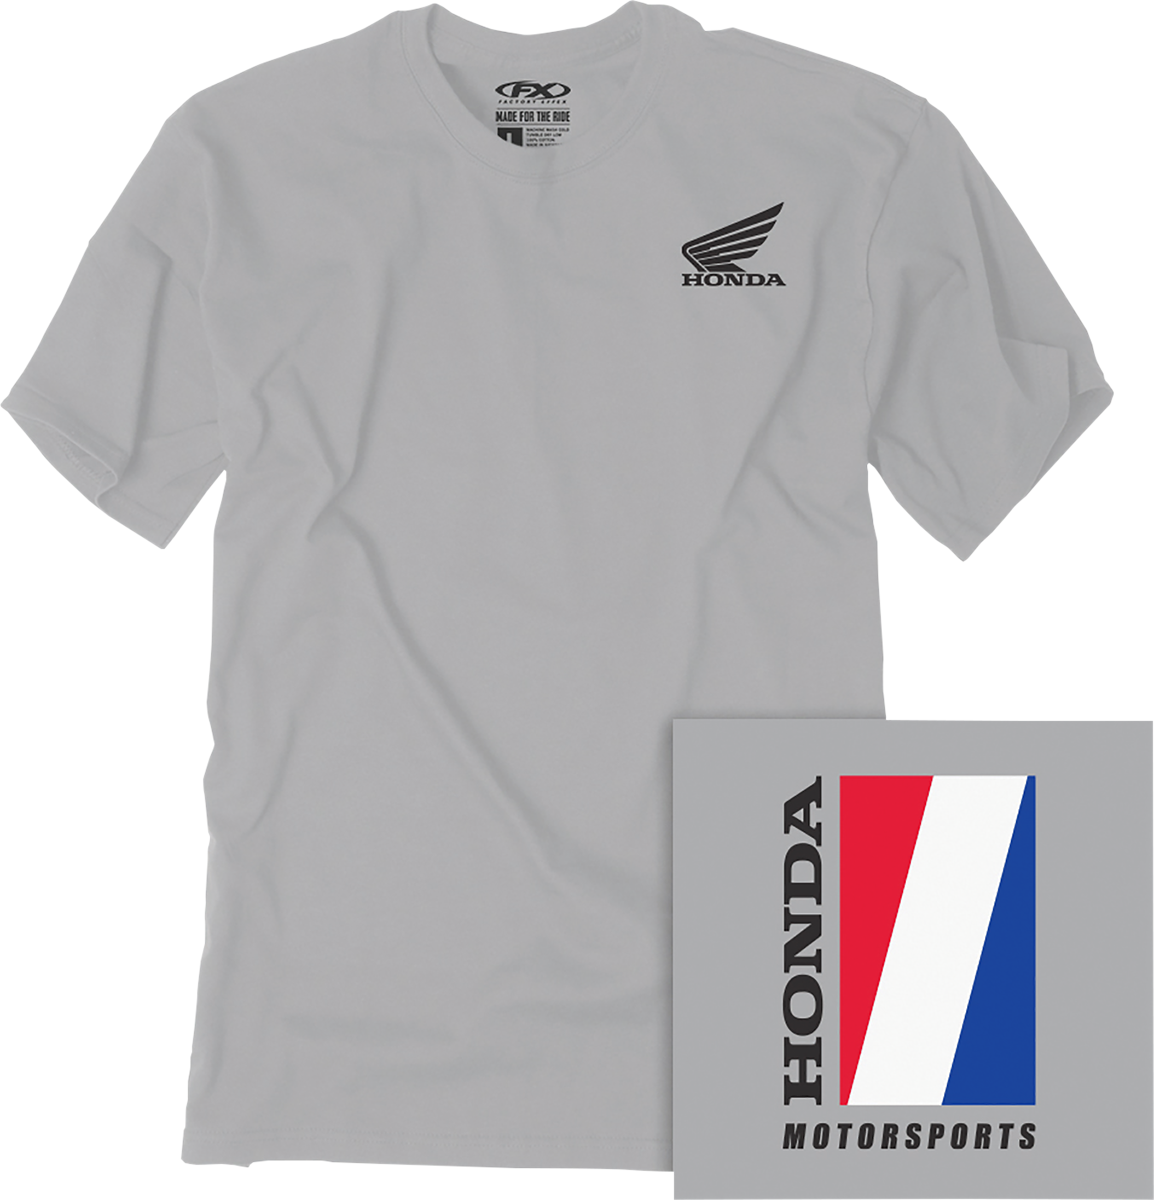 FACTORY EFFEX Honda Motorsports T-Shirt - Gray - Medium 25-87302